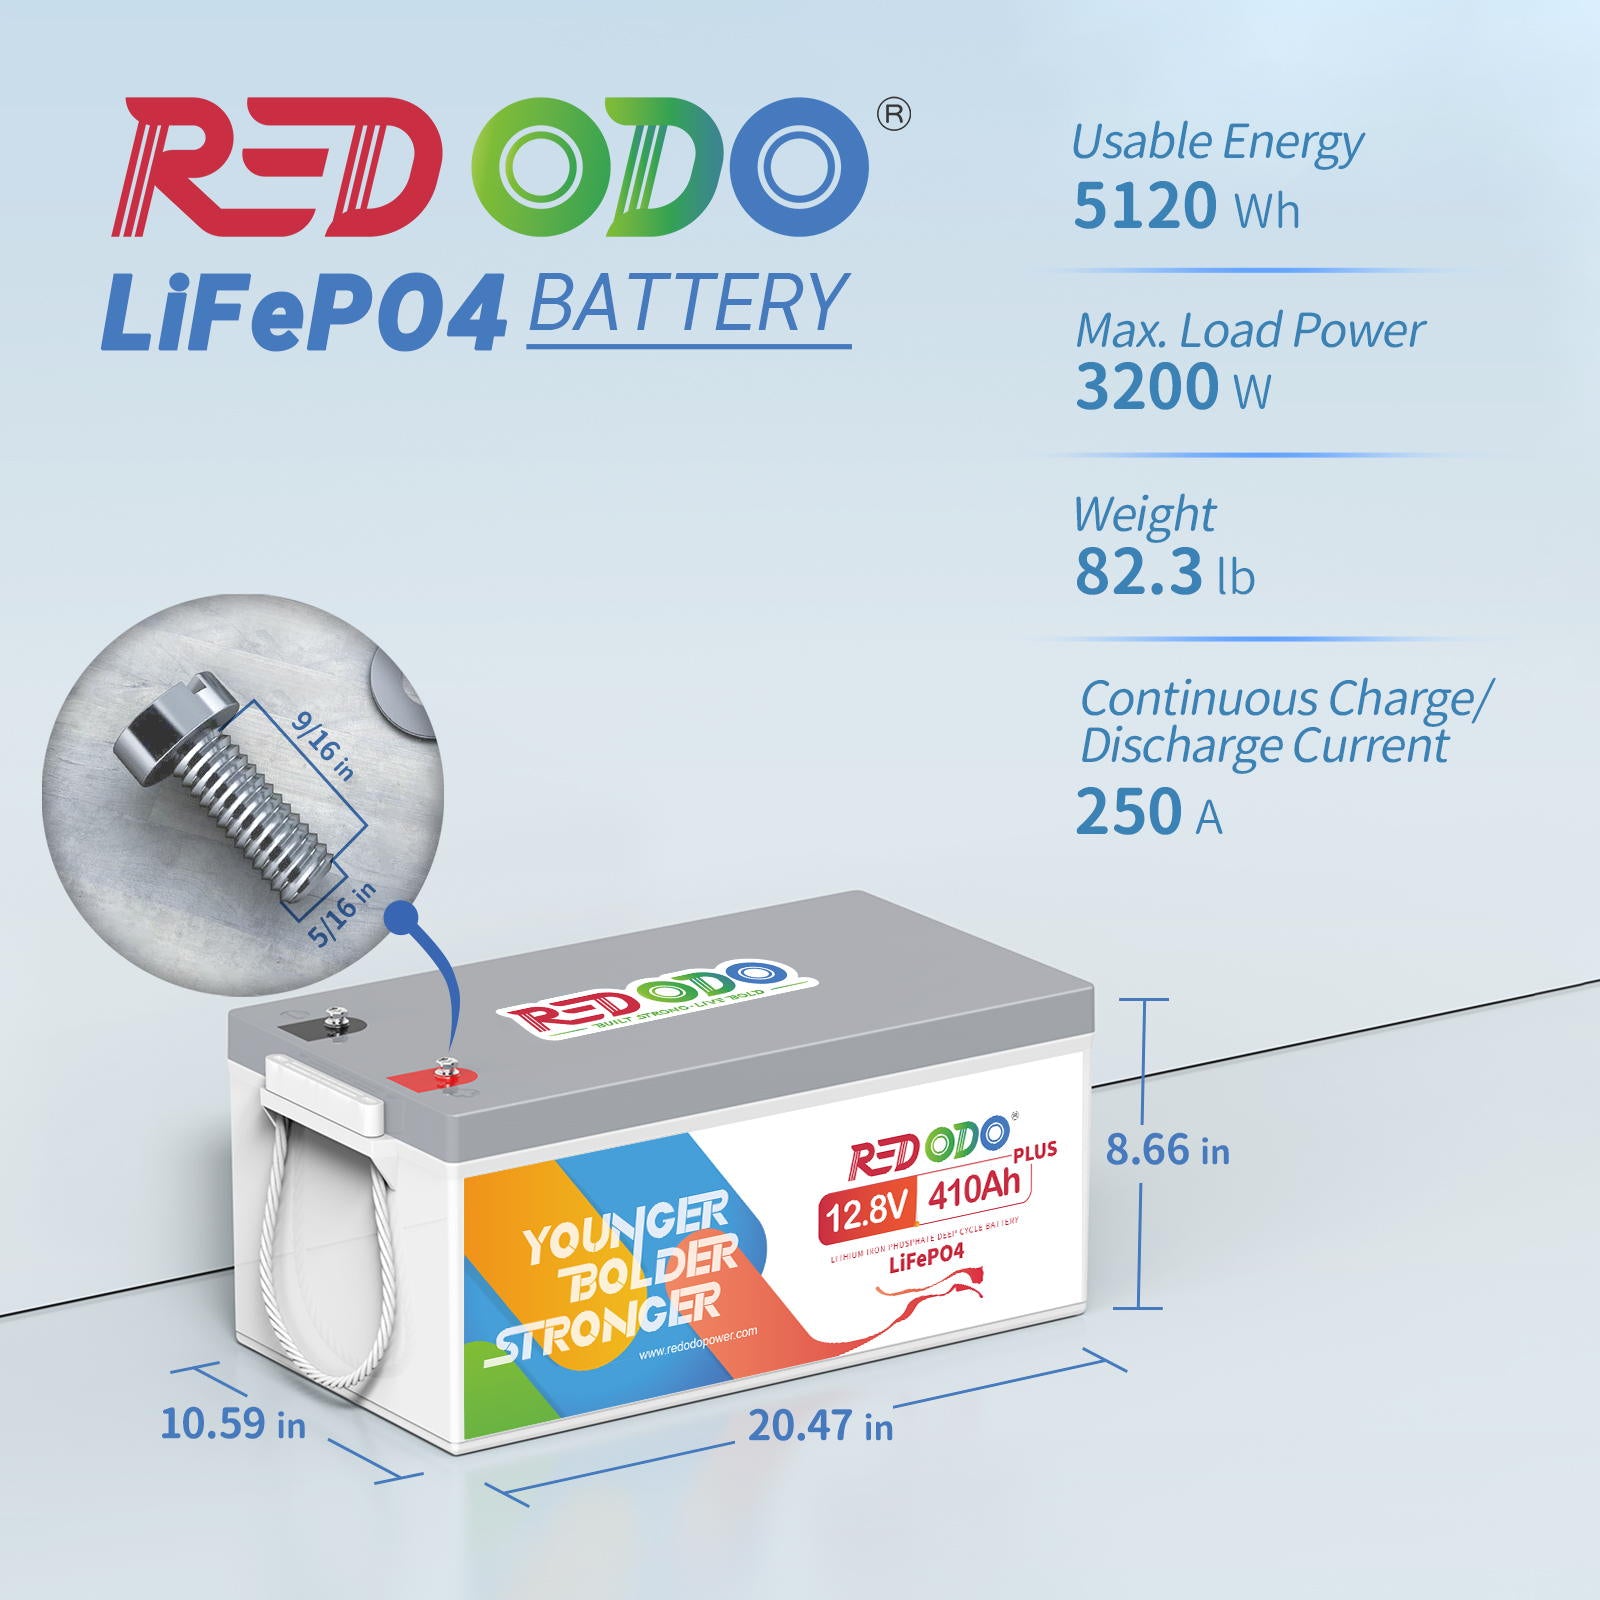 Redodo 12V 410Ah LiFePO4 battery | 5.24kWh & 3.2kW